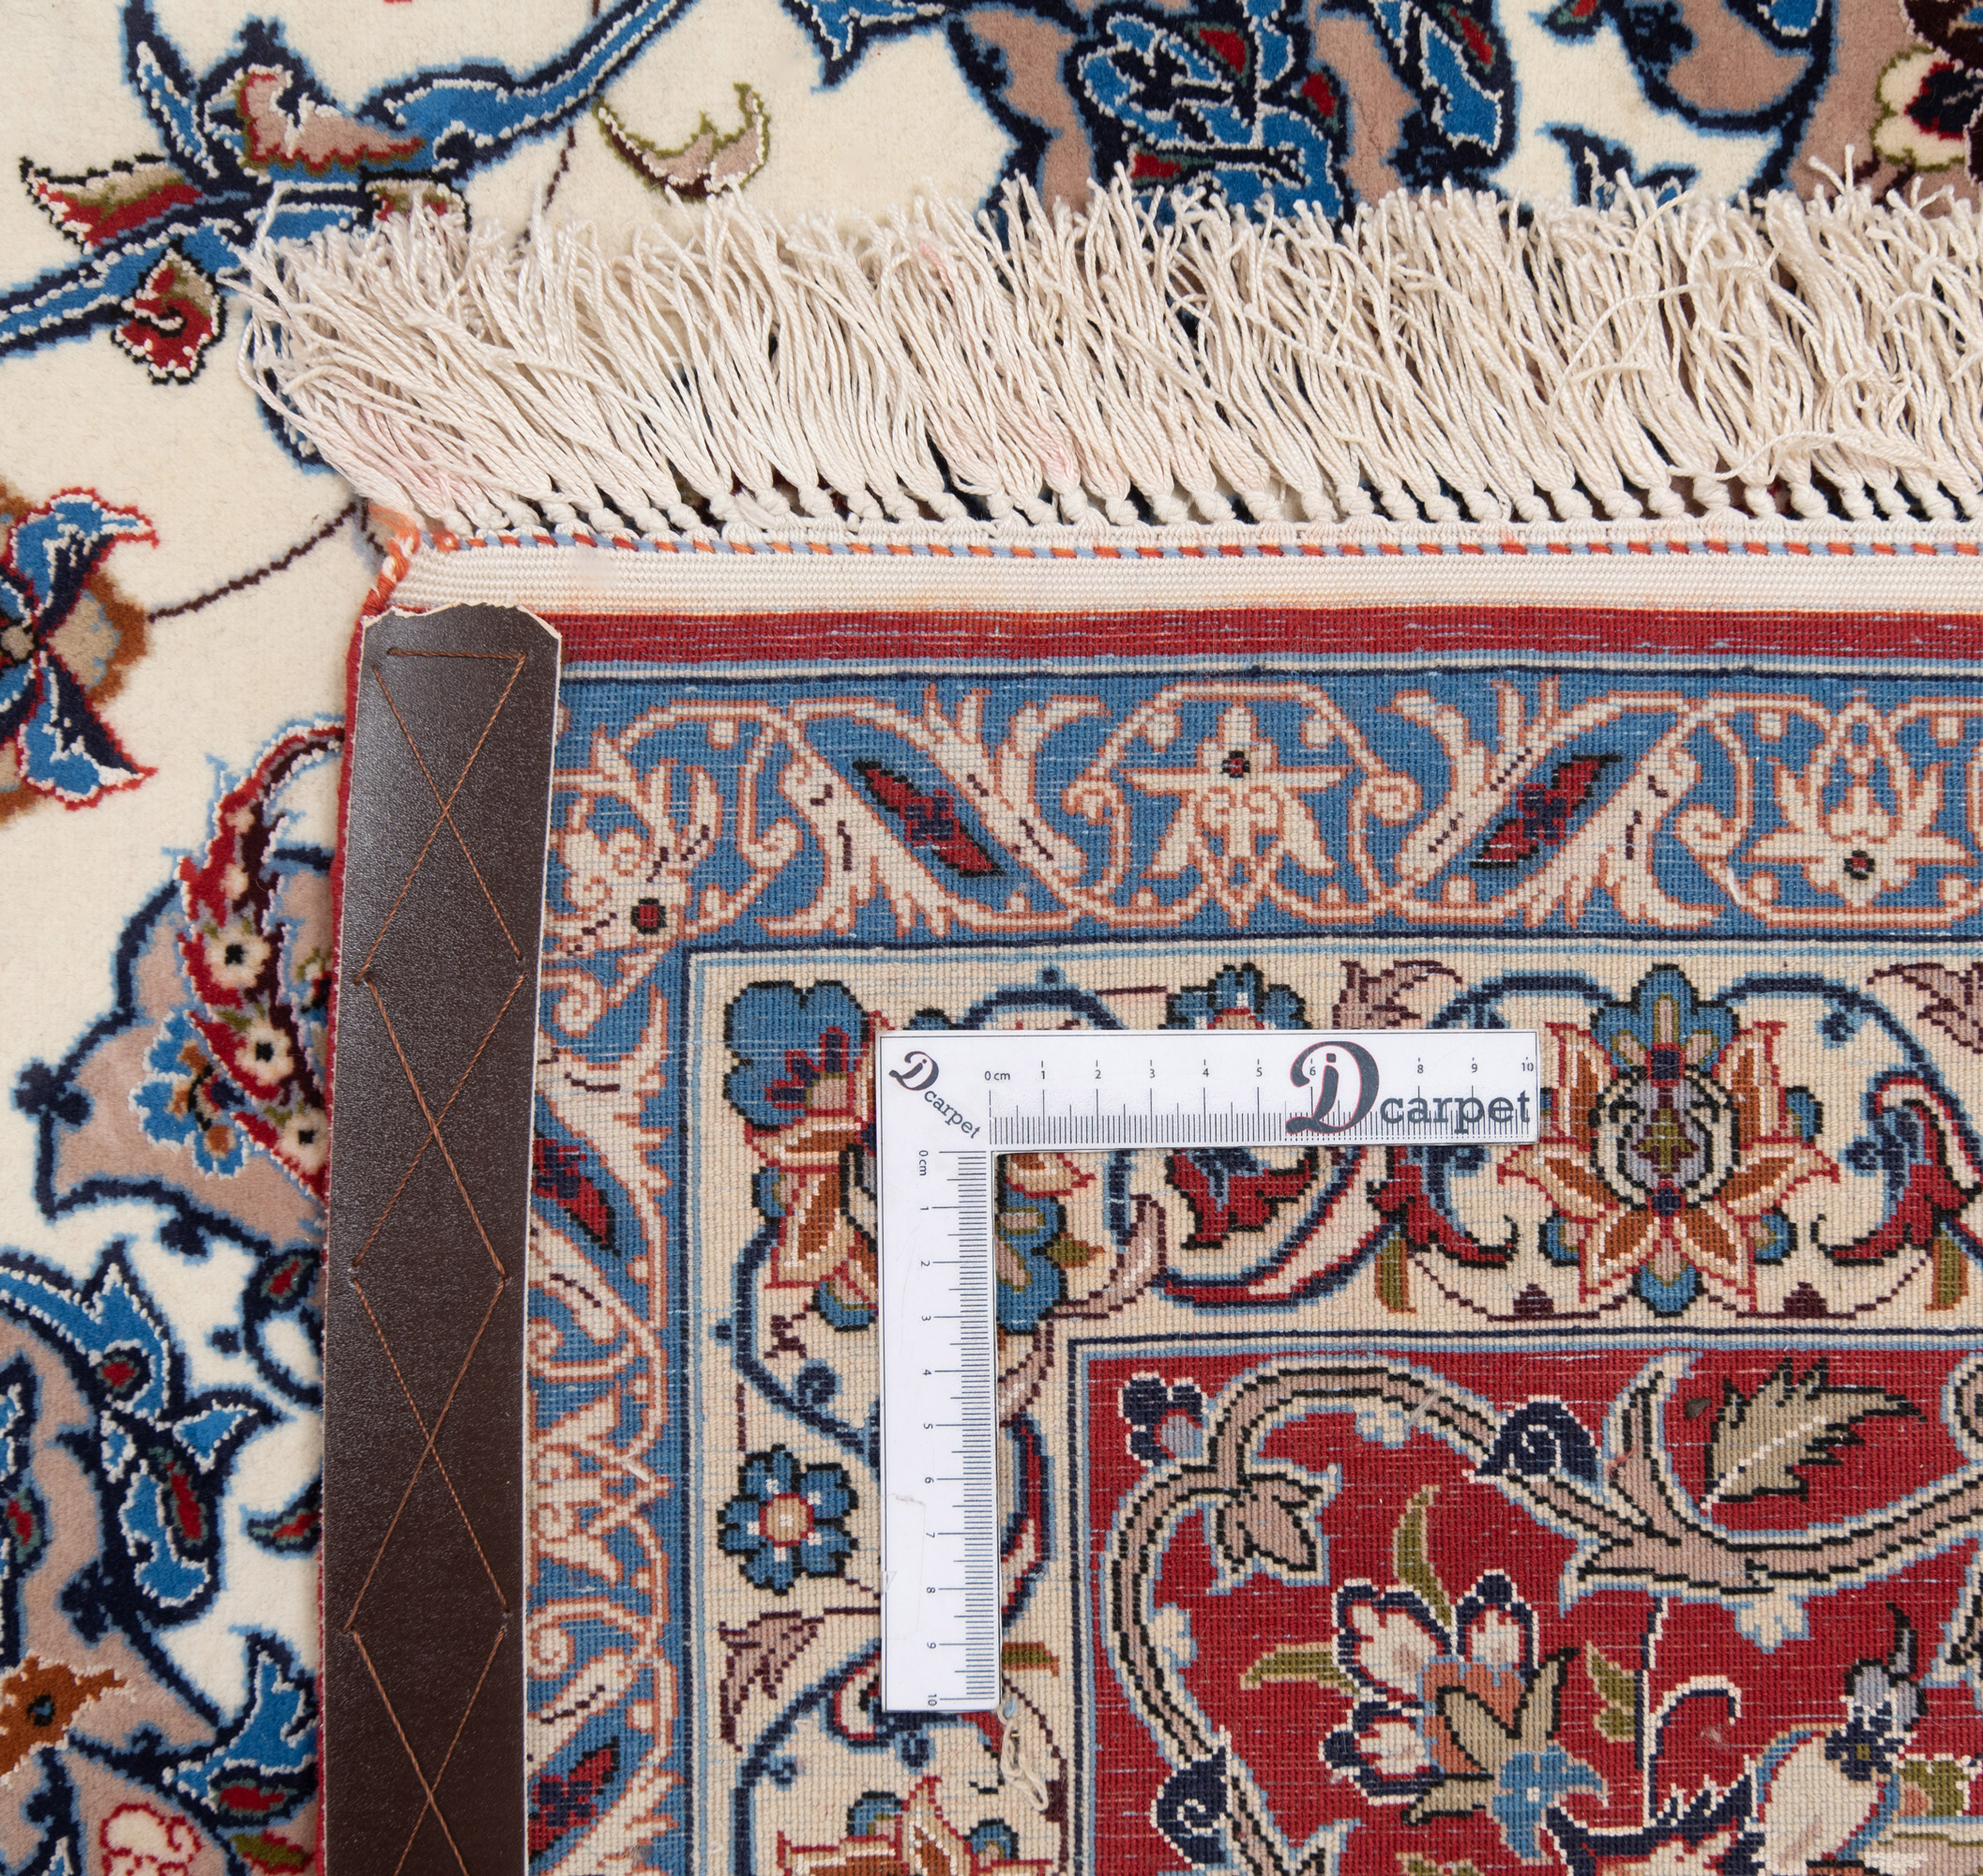 Isfahan Persian Carpet